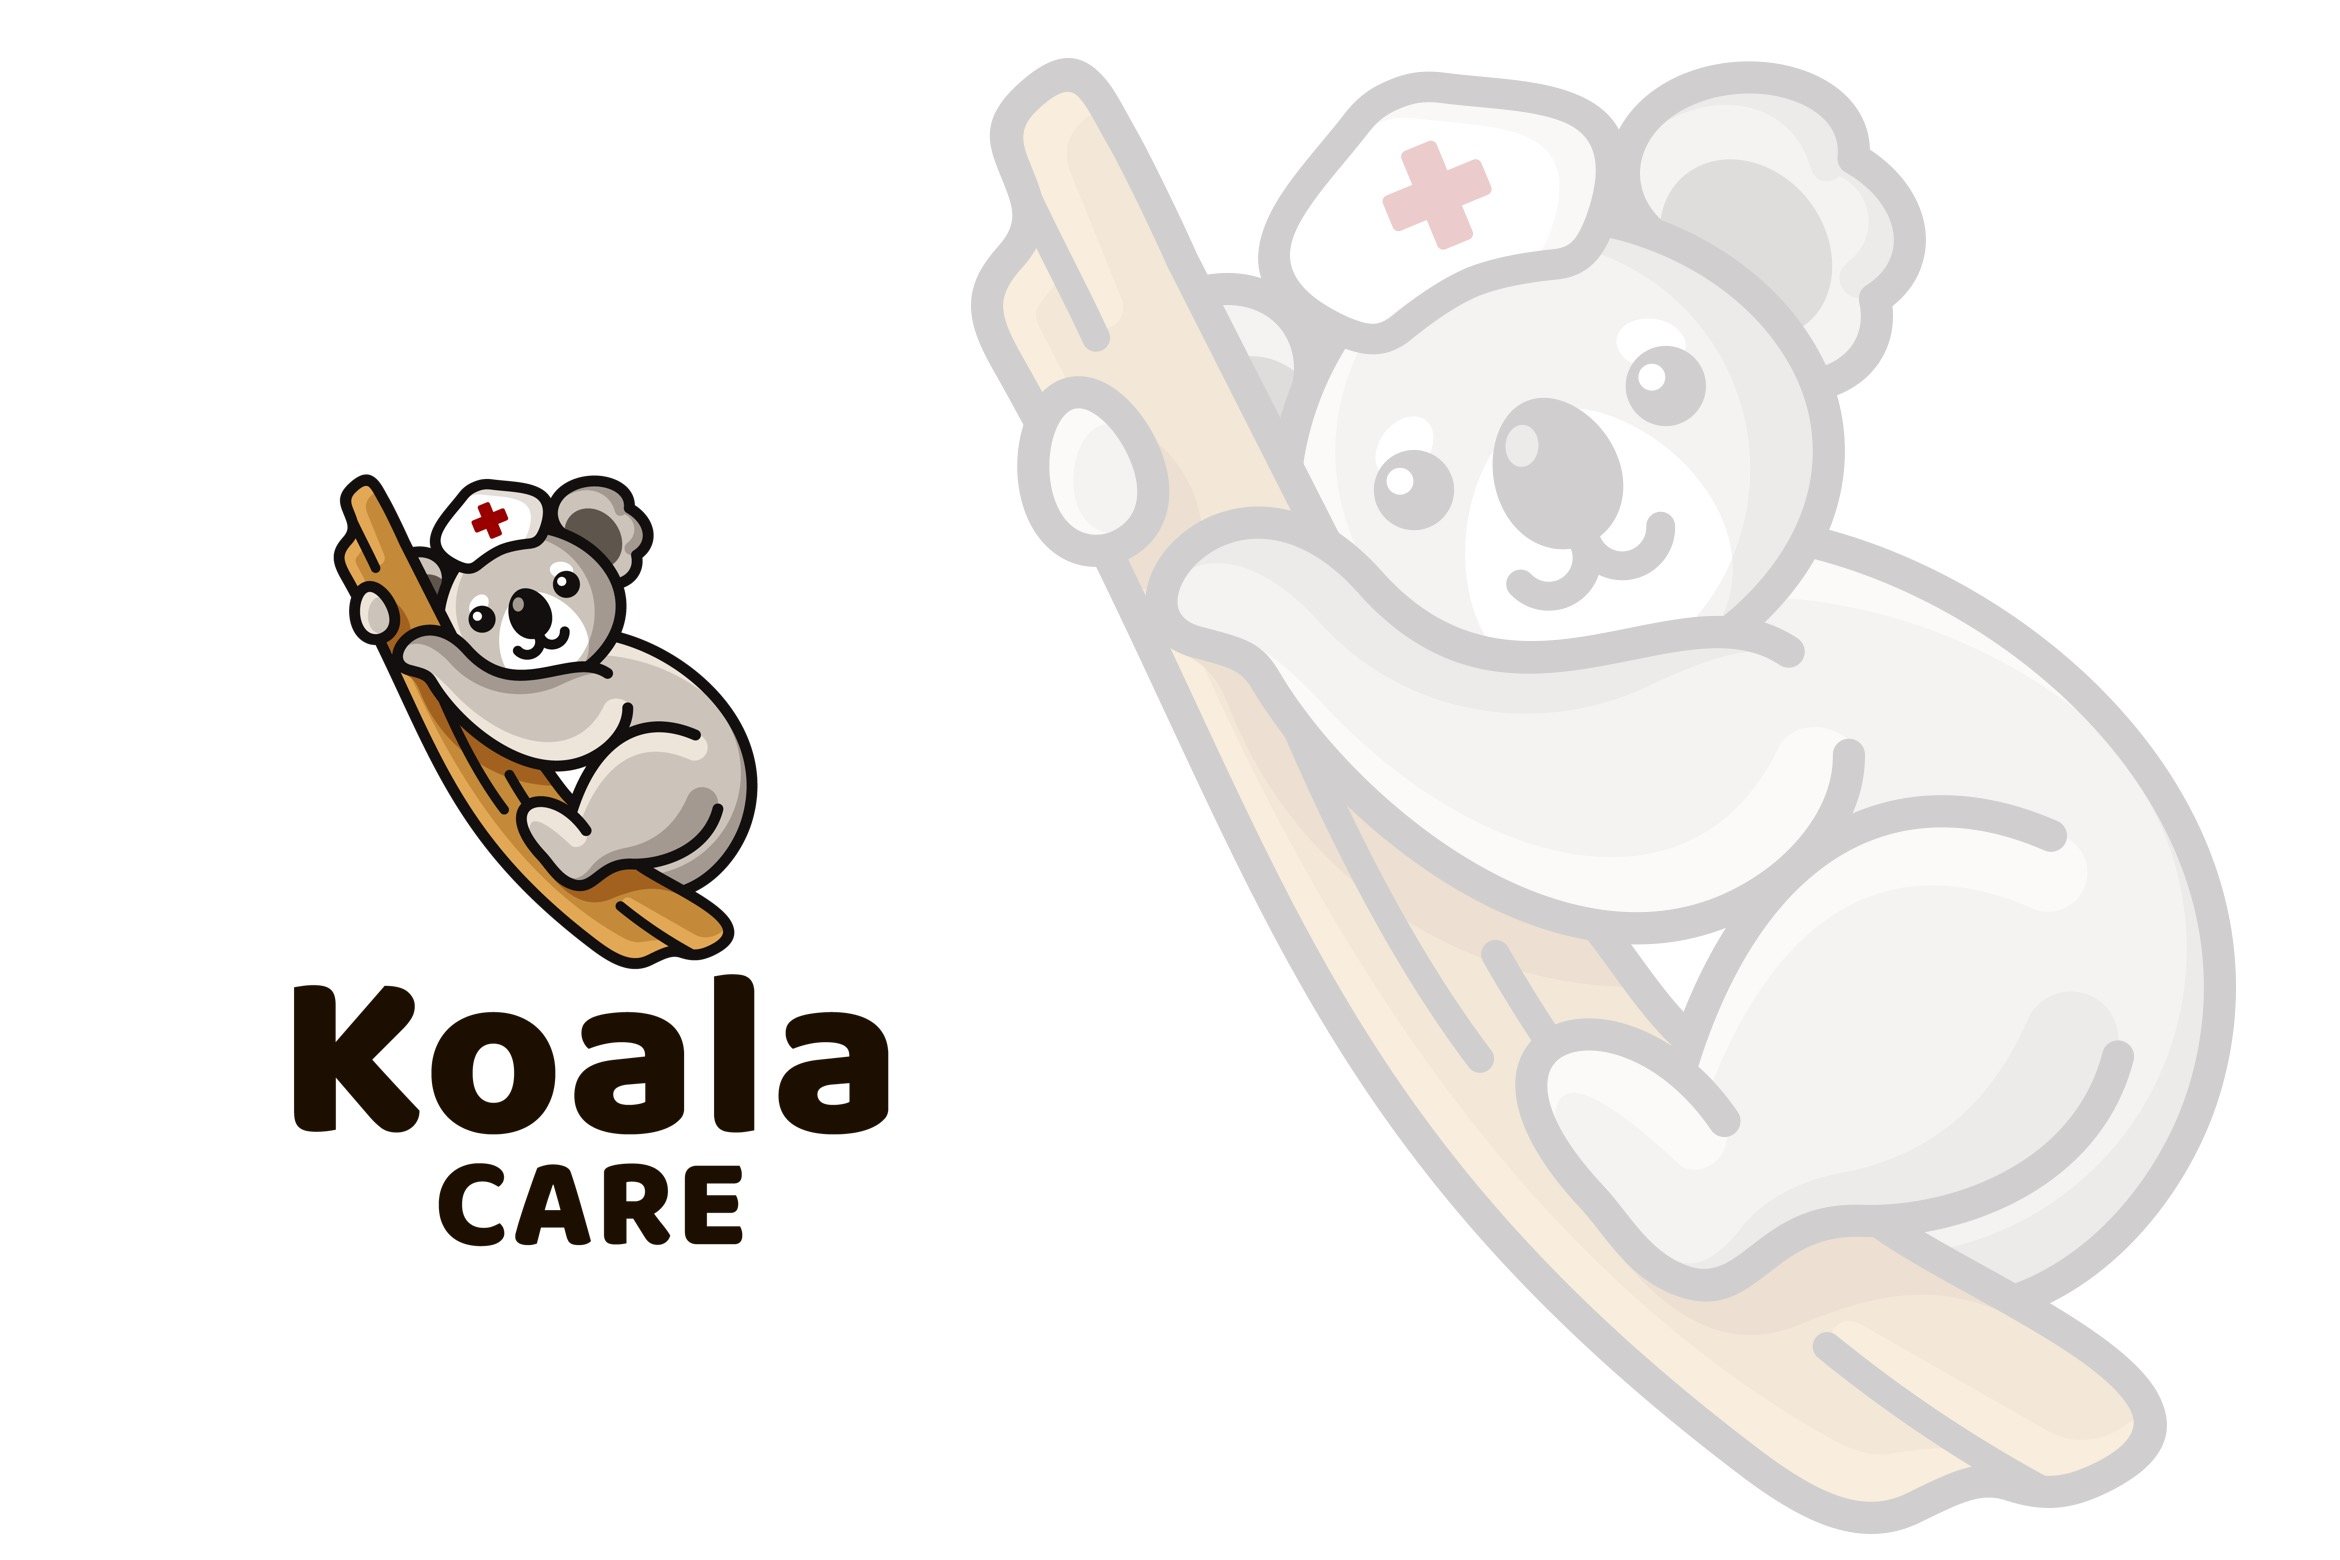 Koala Care Cute Kids Logo Template cover image.